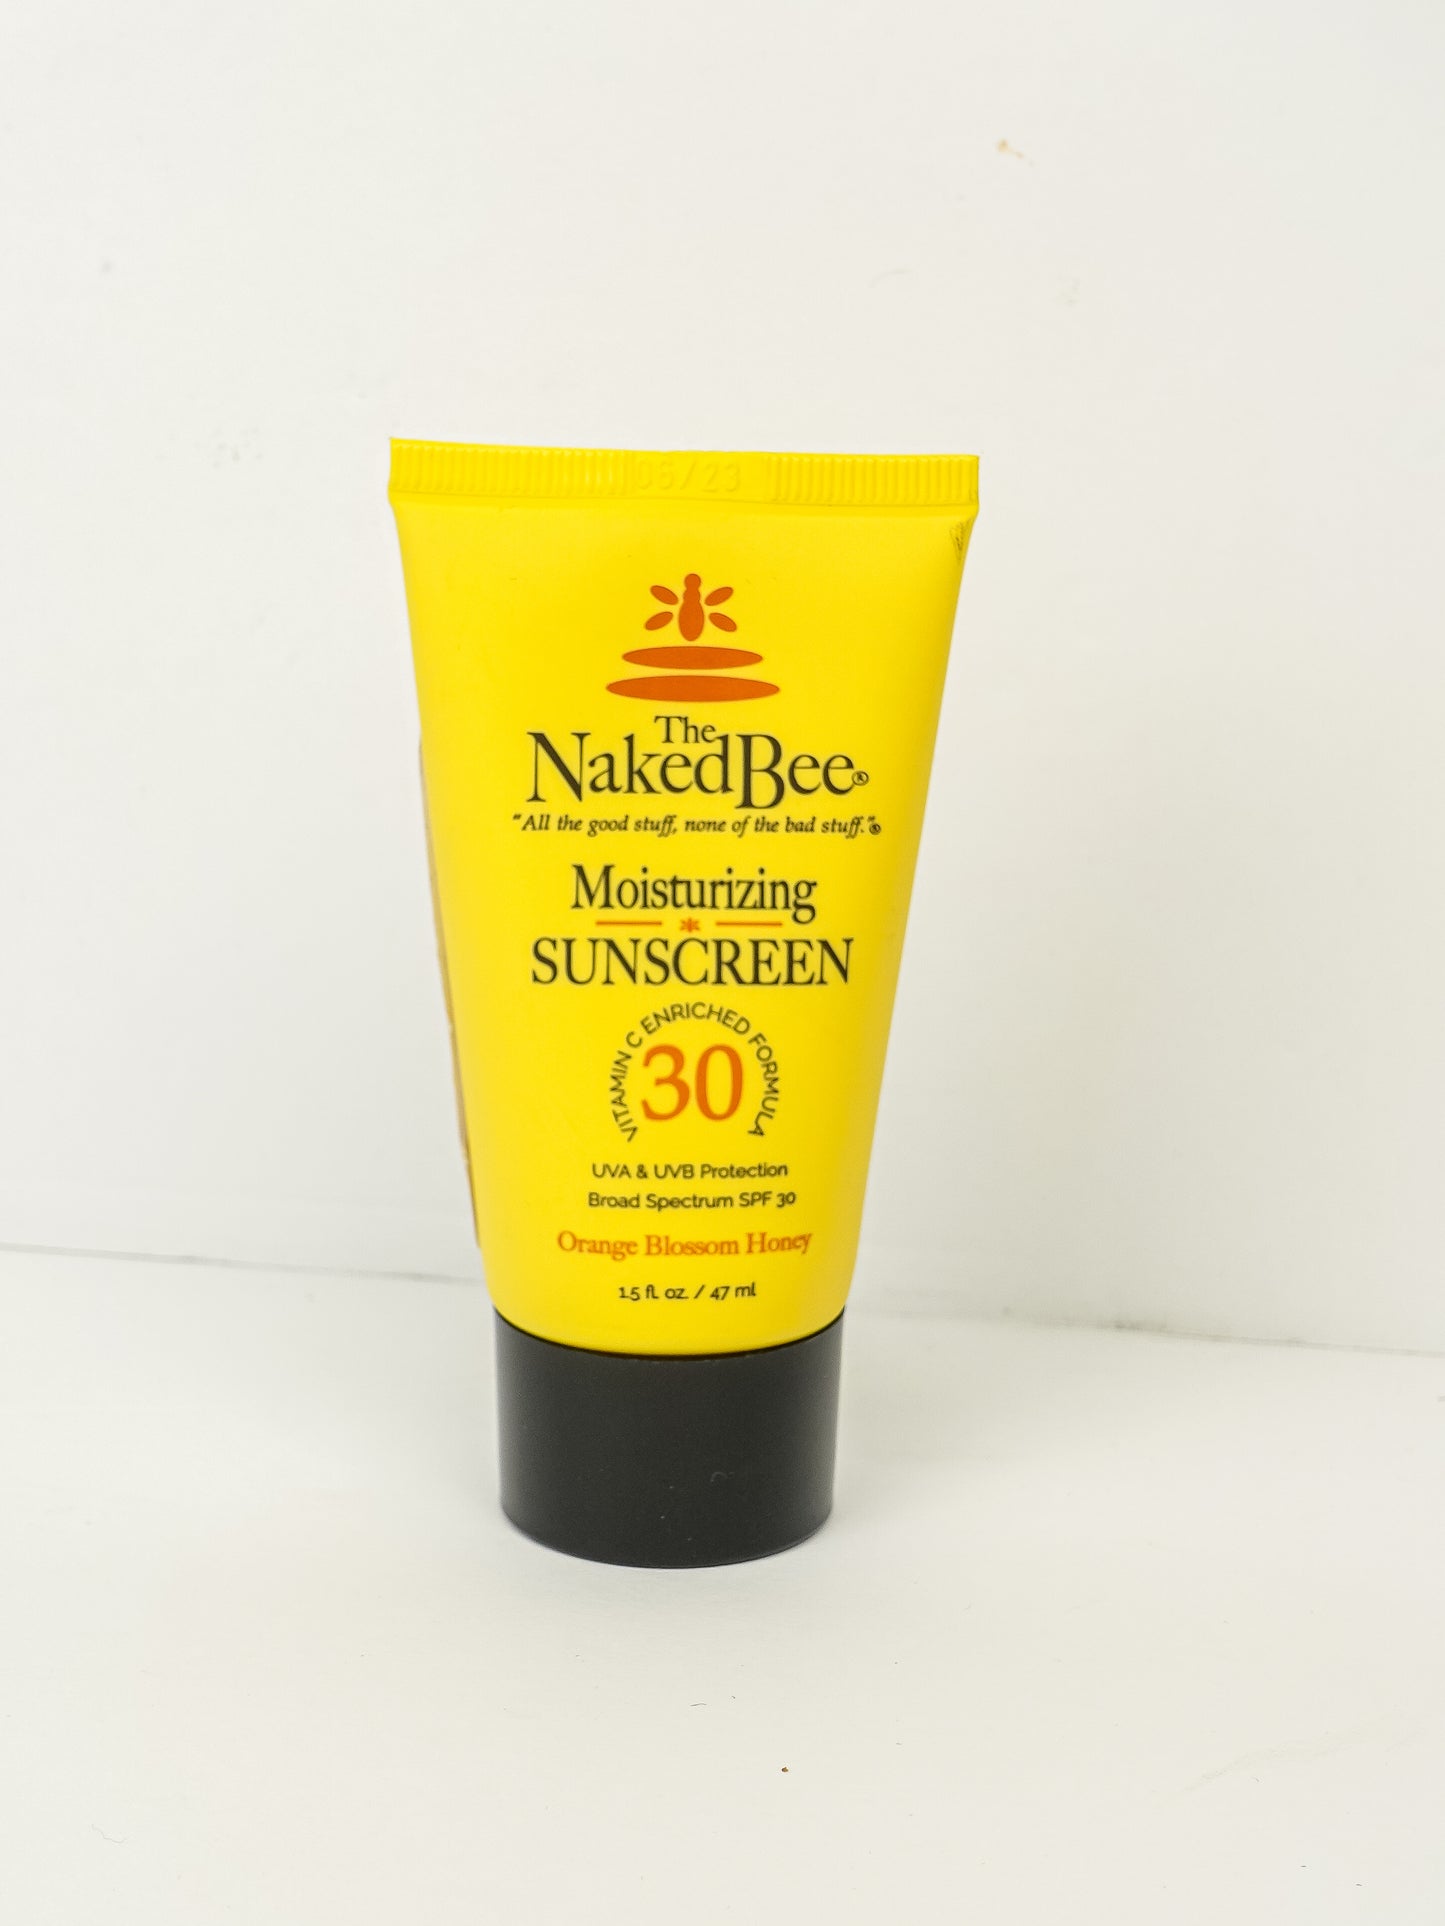 Moisturizing Sunscreen - The Naked Bee